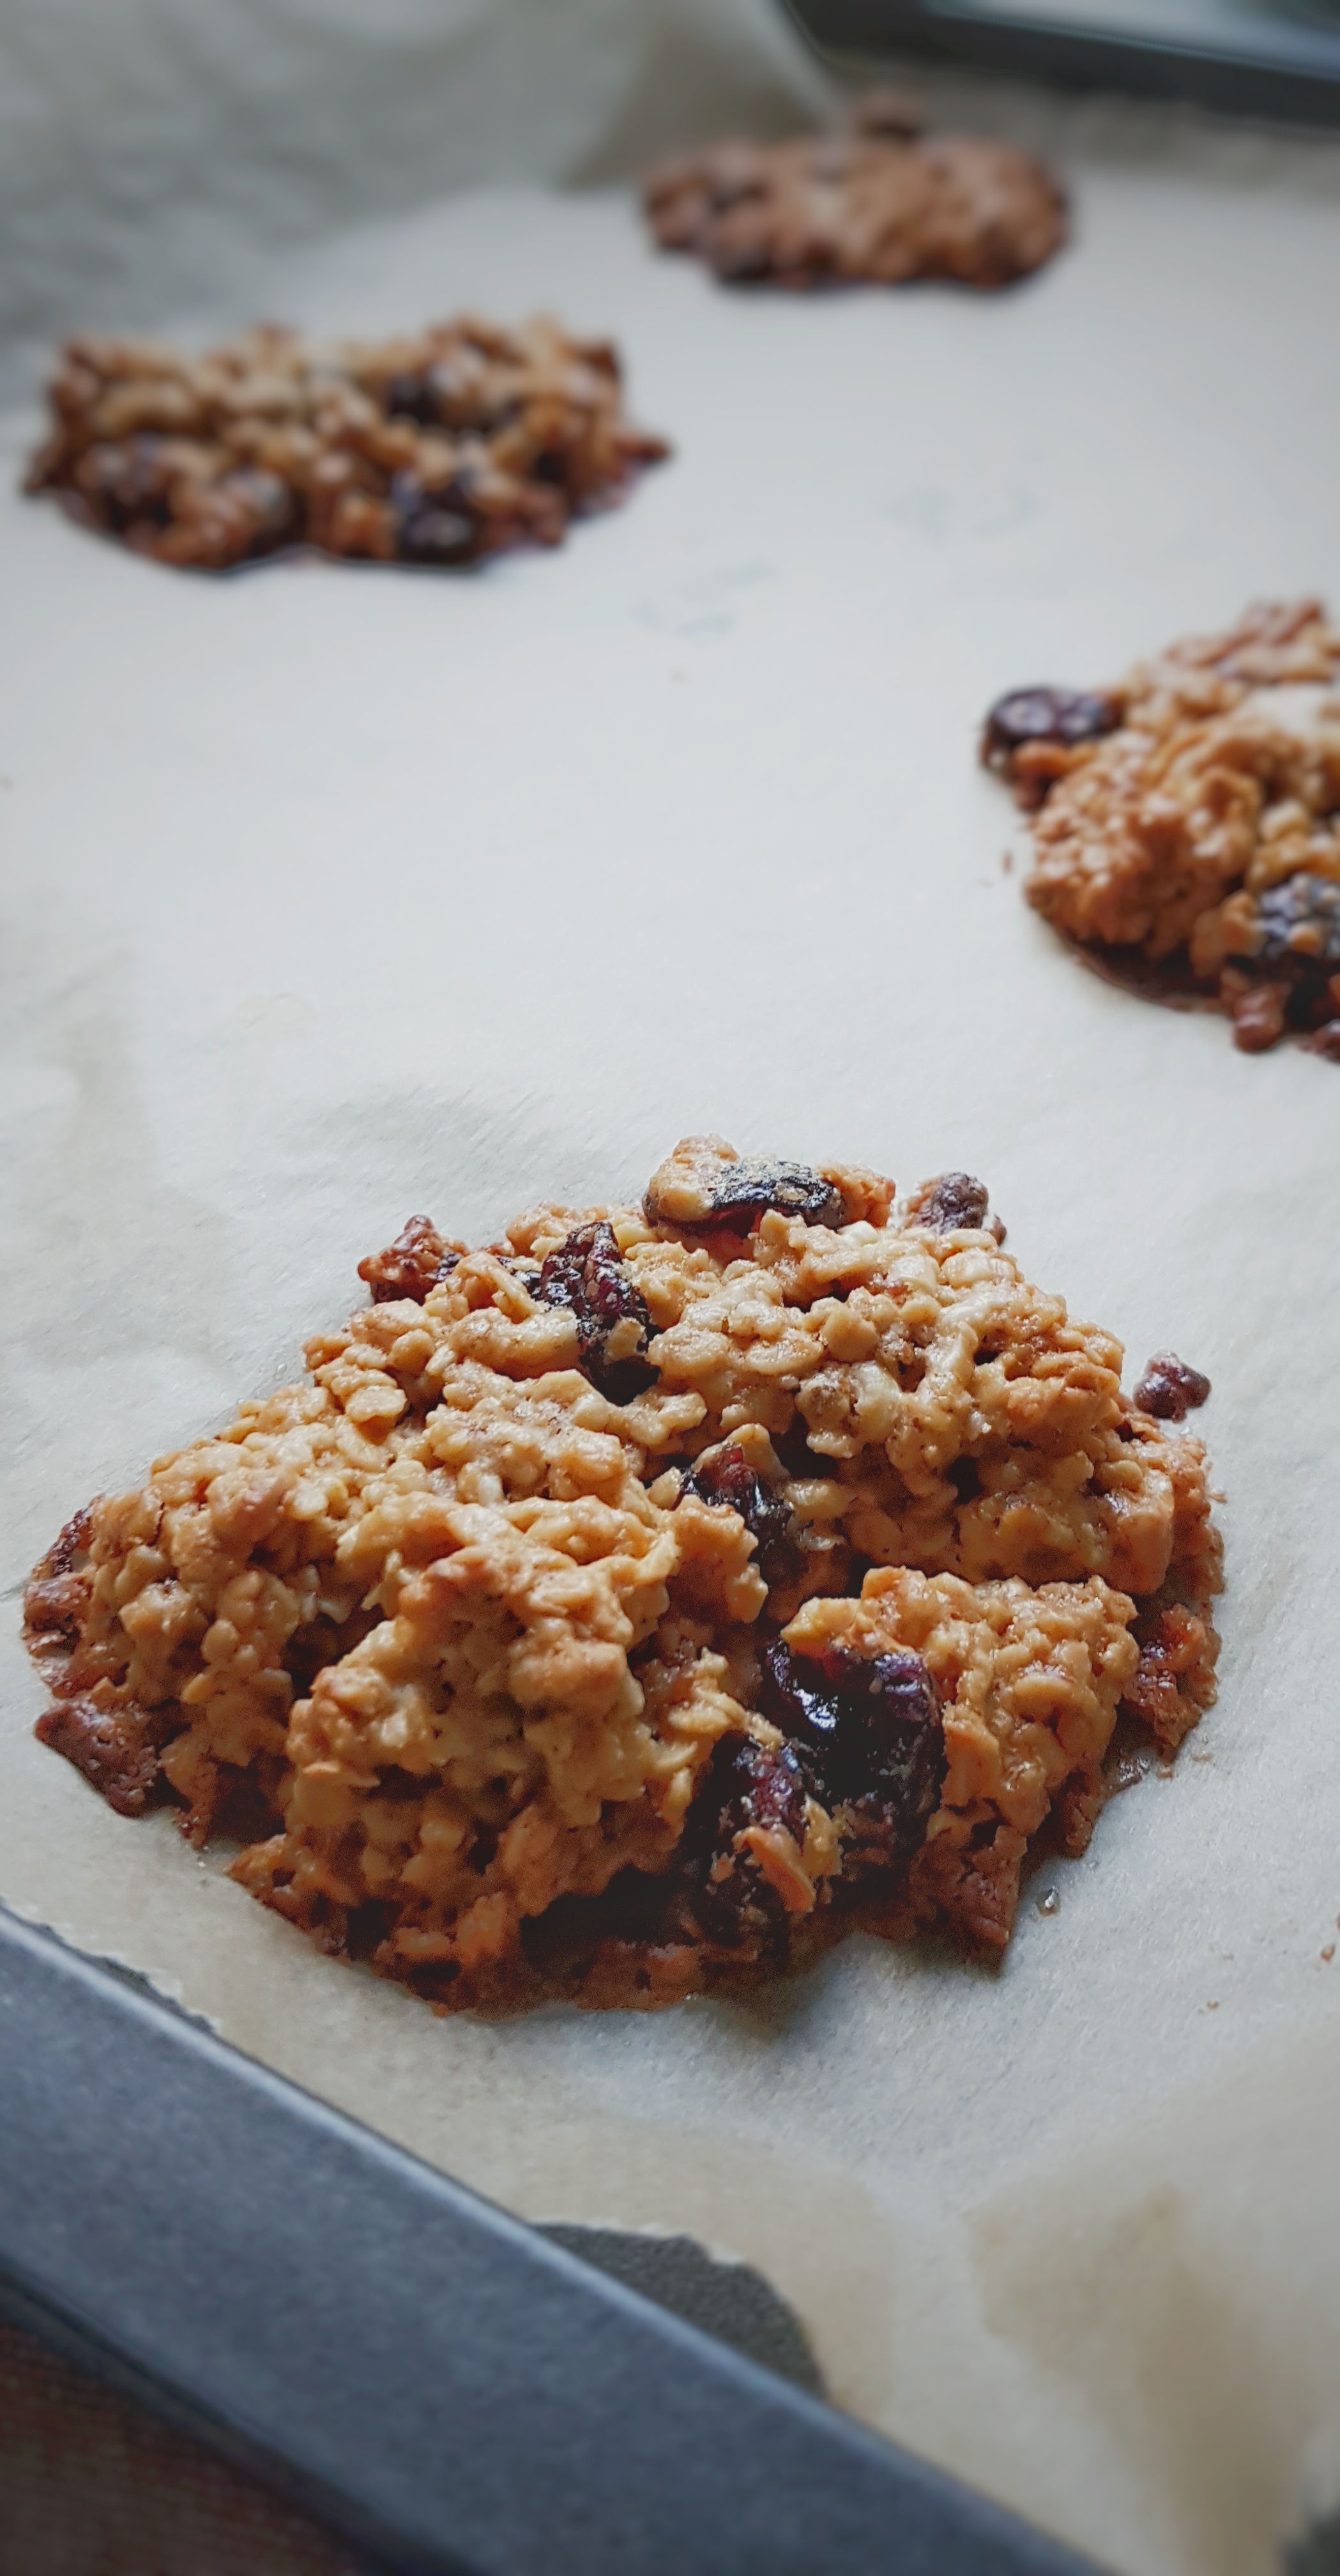 Gluten free cranberry oat cookies - enjoy gluten free